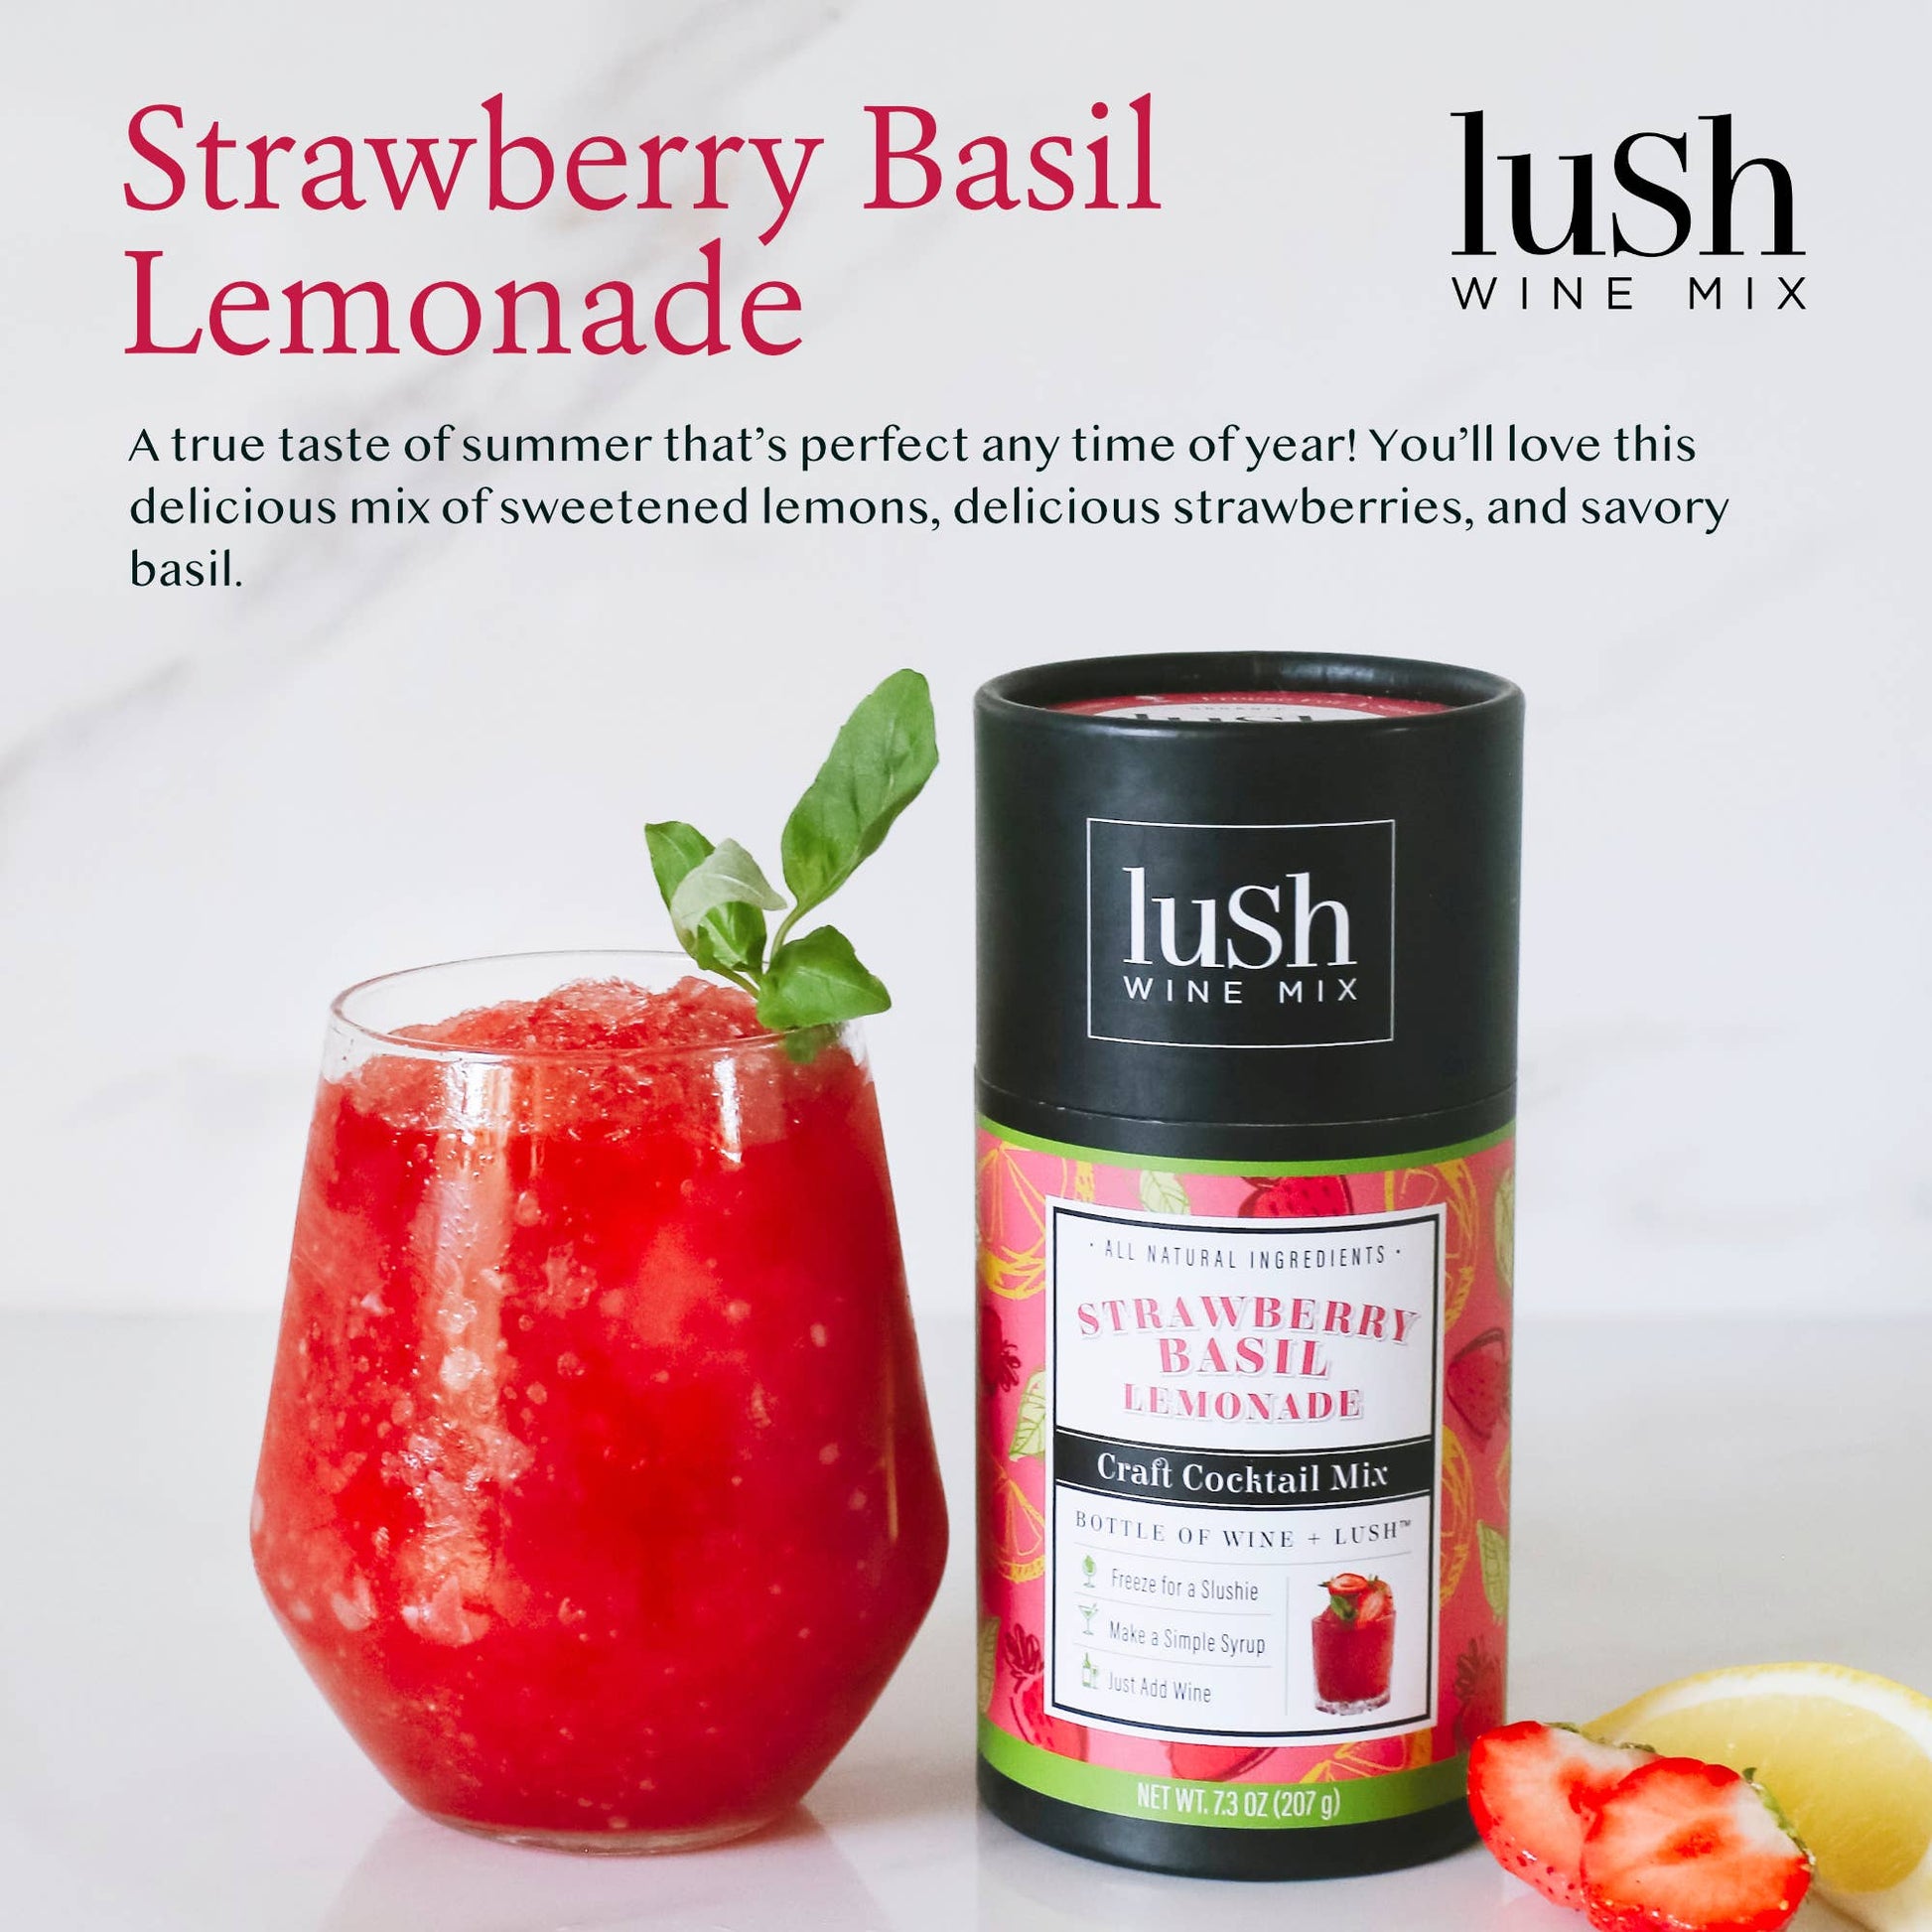 Lush Wine Mix - Strawberry Basil Lemonade Singles  Lush Wine Mix   -better made easy-eco-friendly-sustainable-gifting